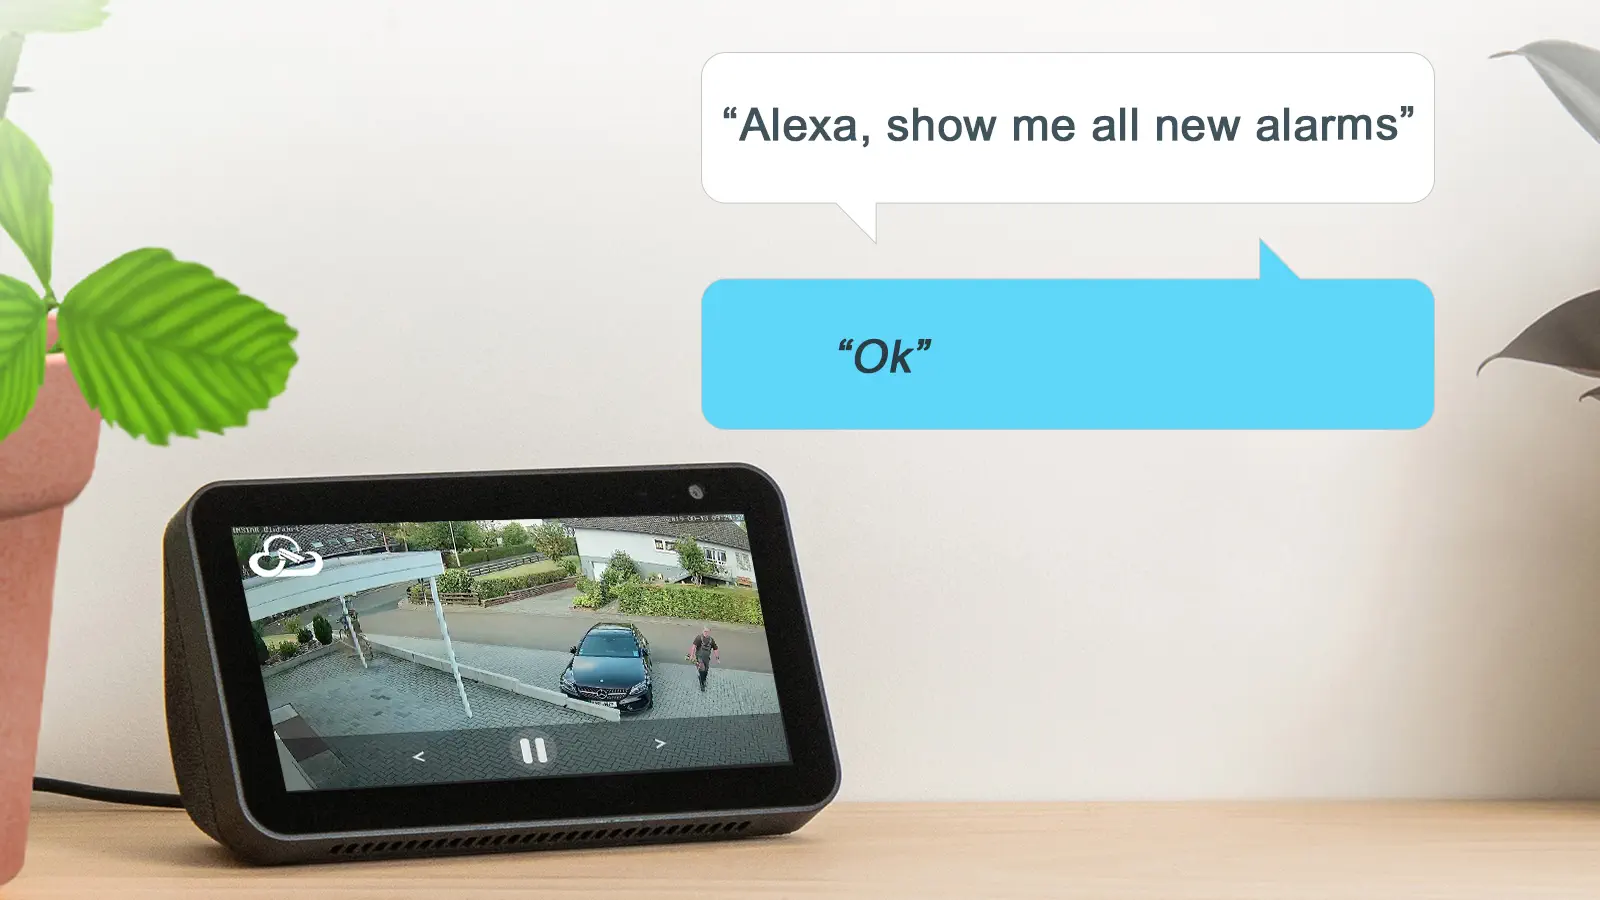 Alexa Play alarm videos based on alarms status